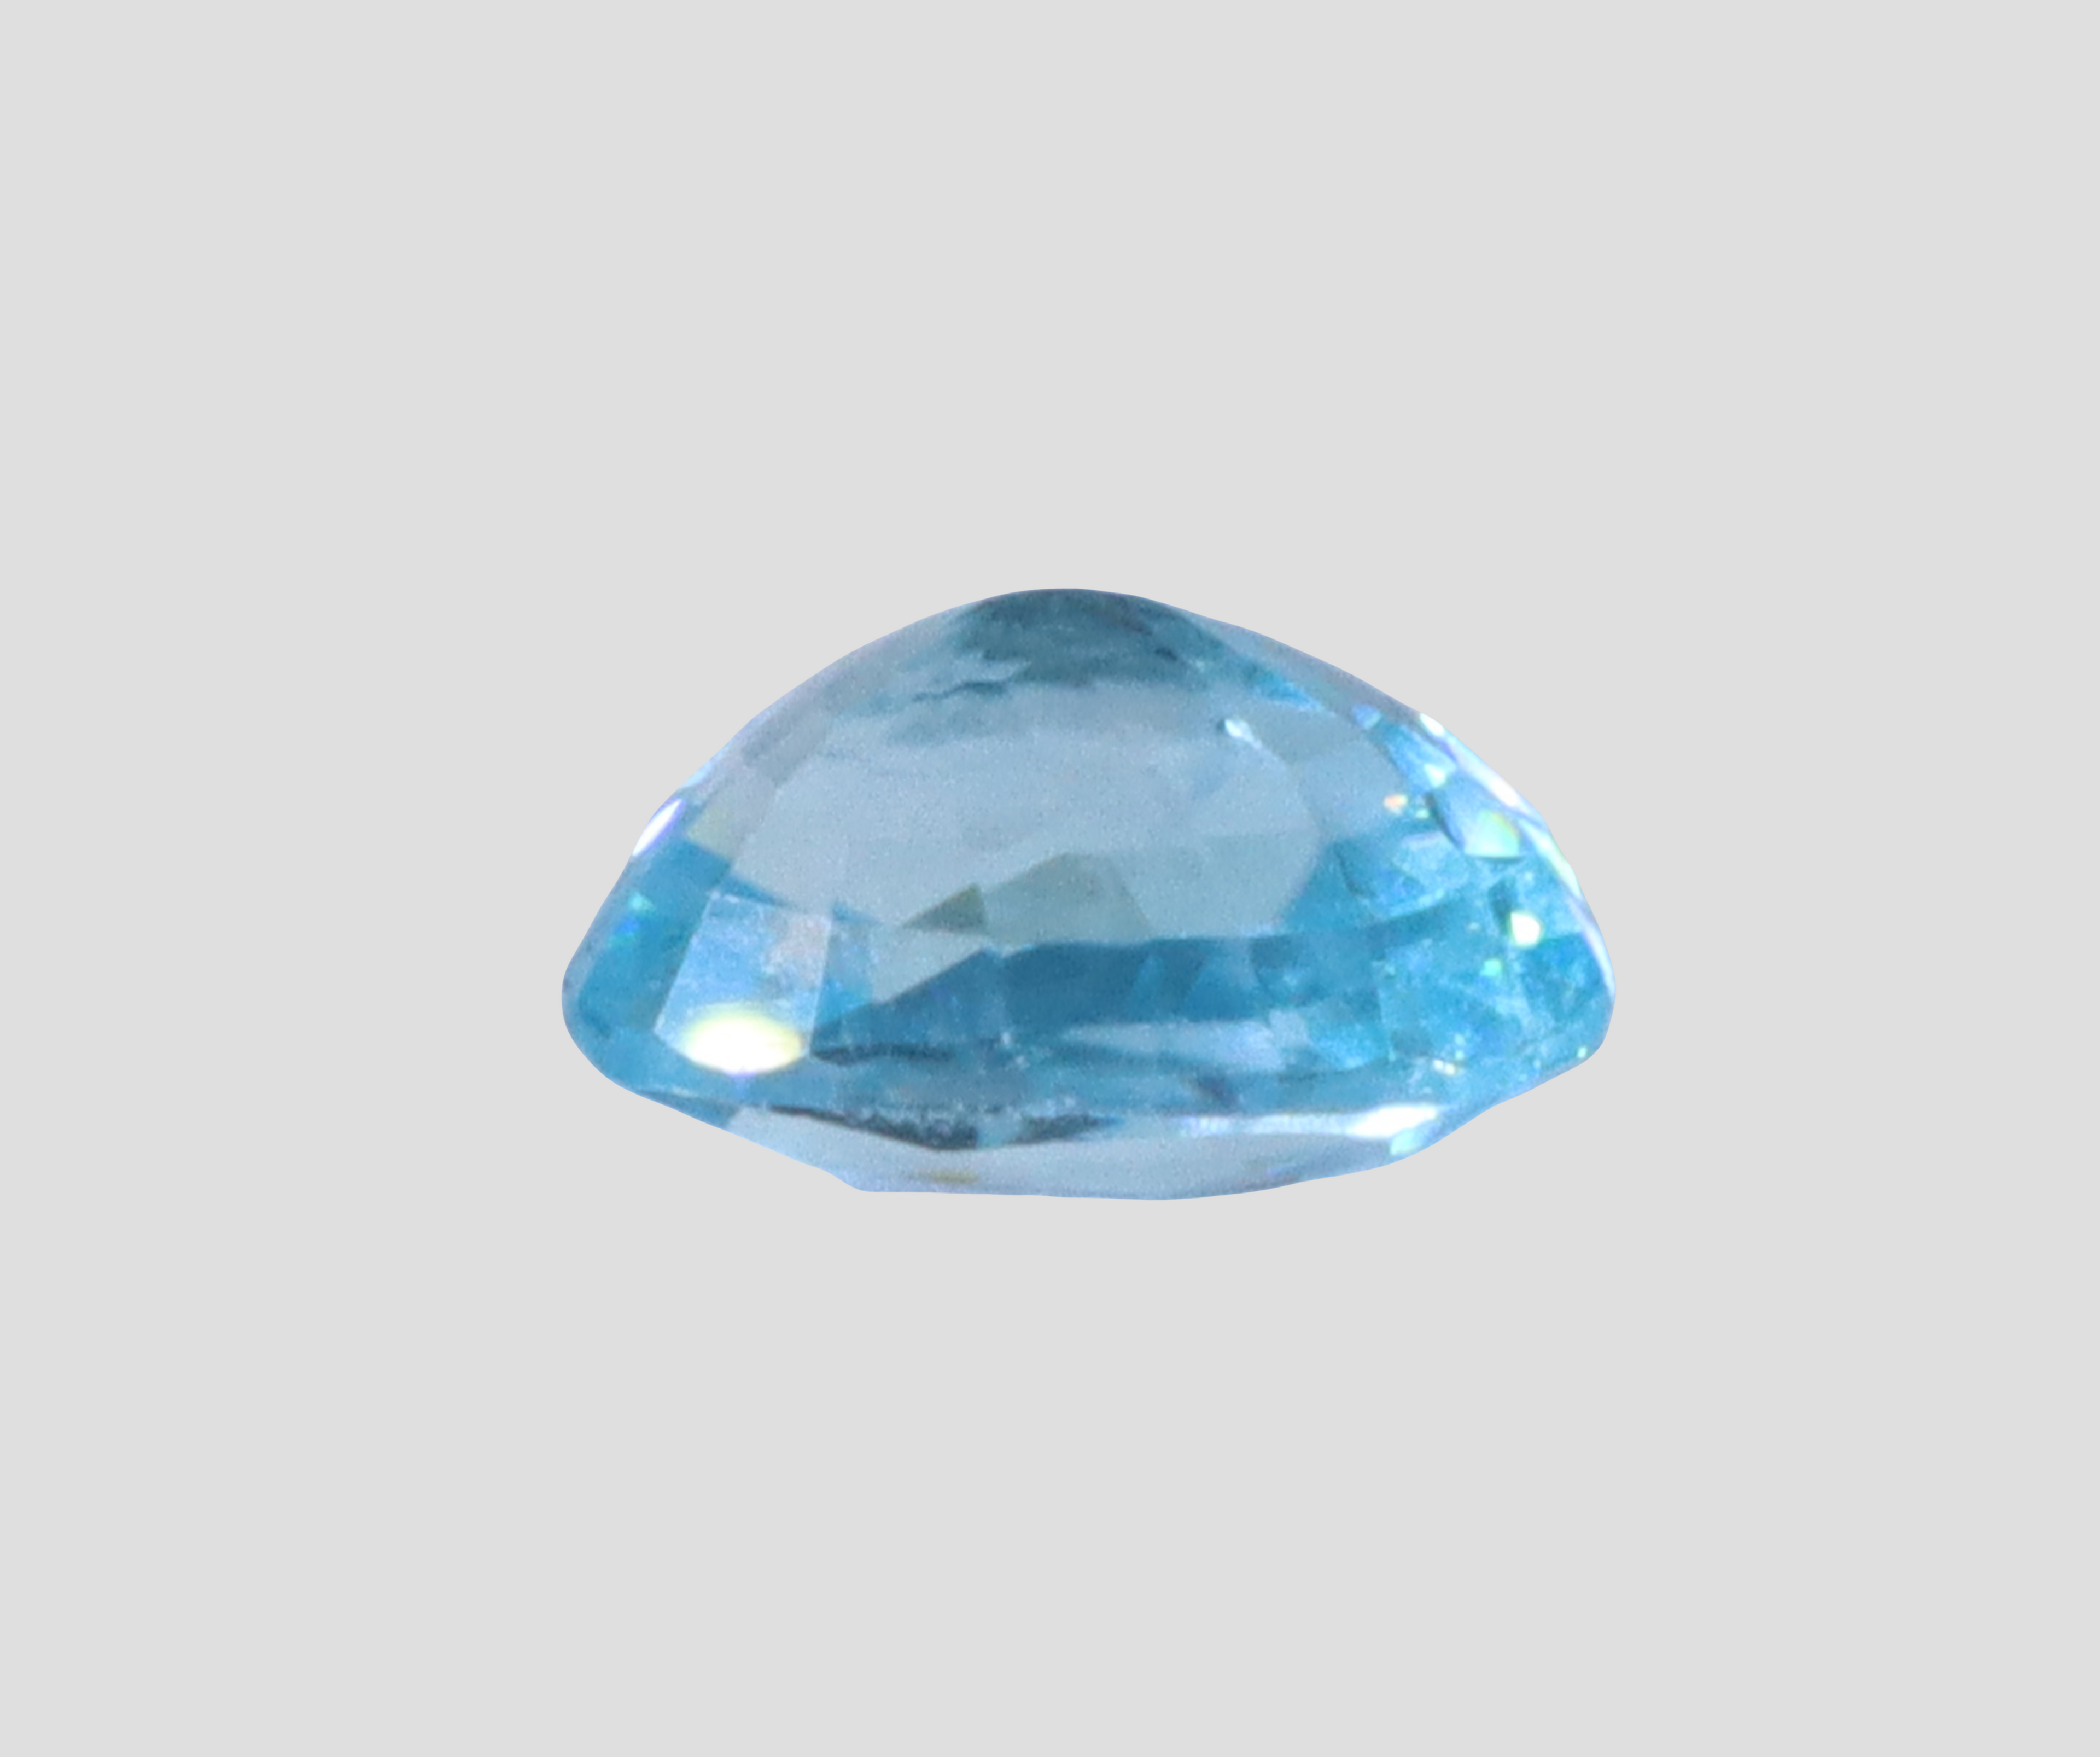 Blue Zircon - 5.38 Carats